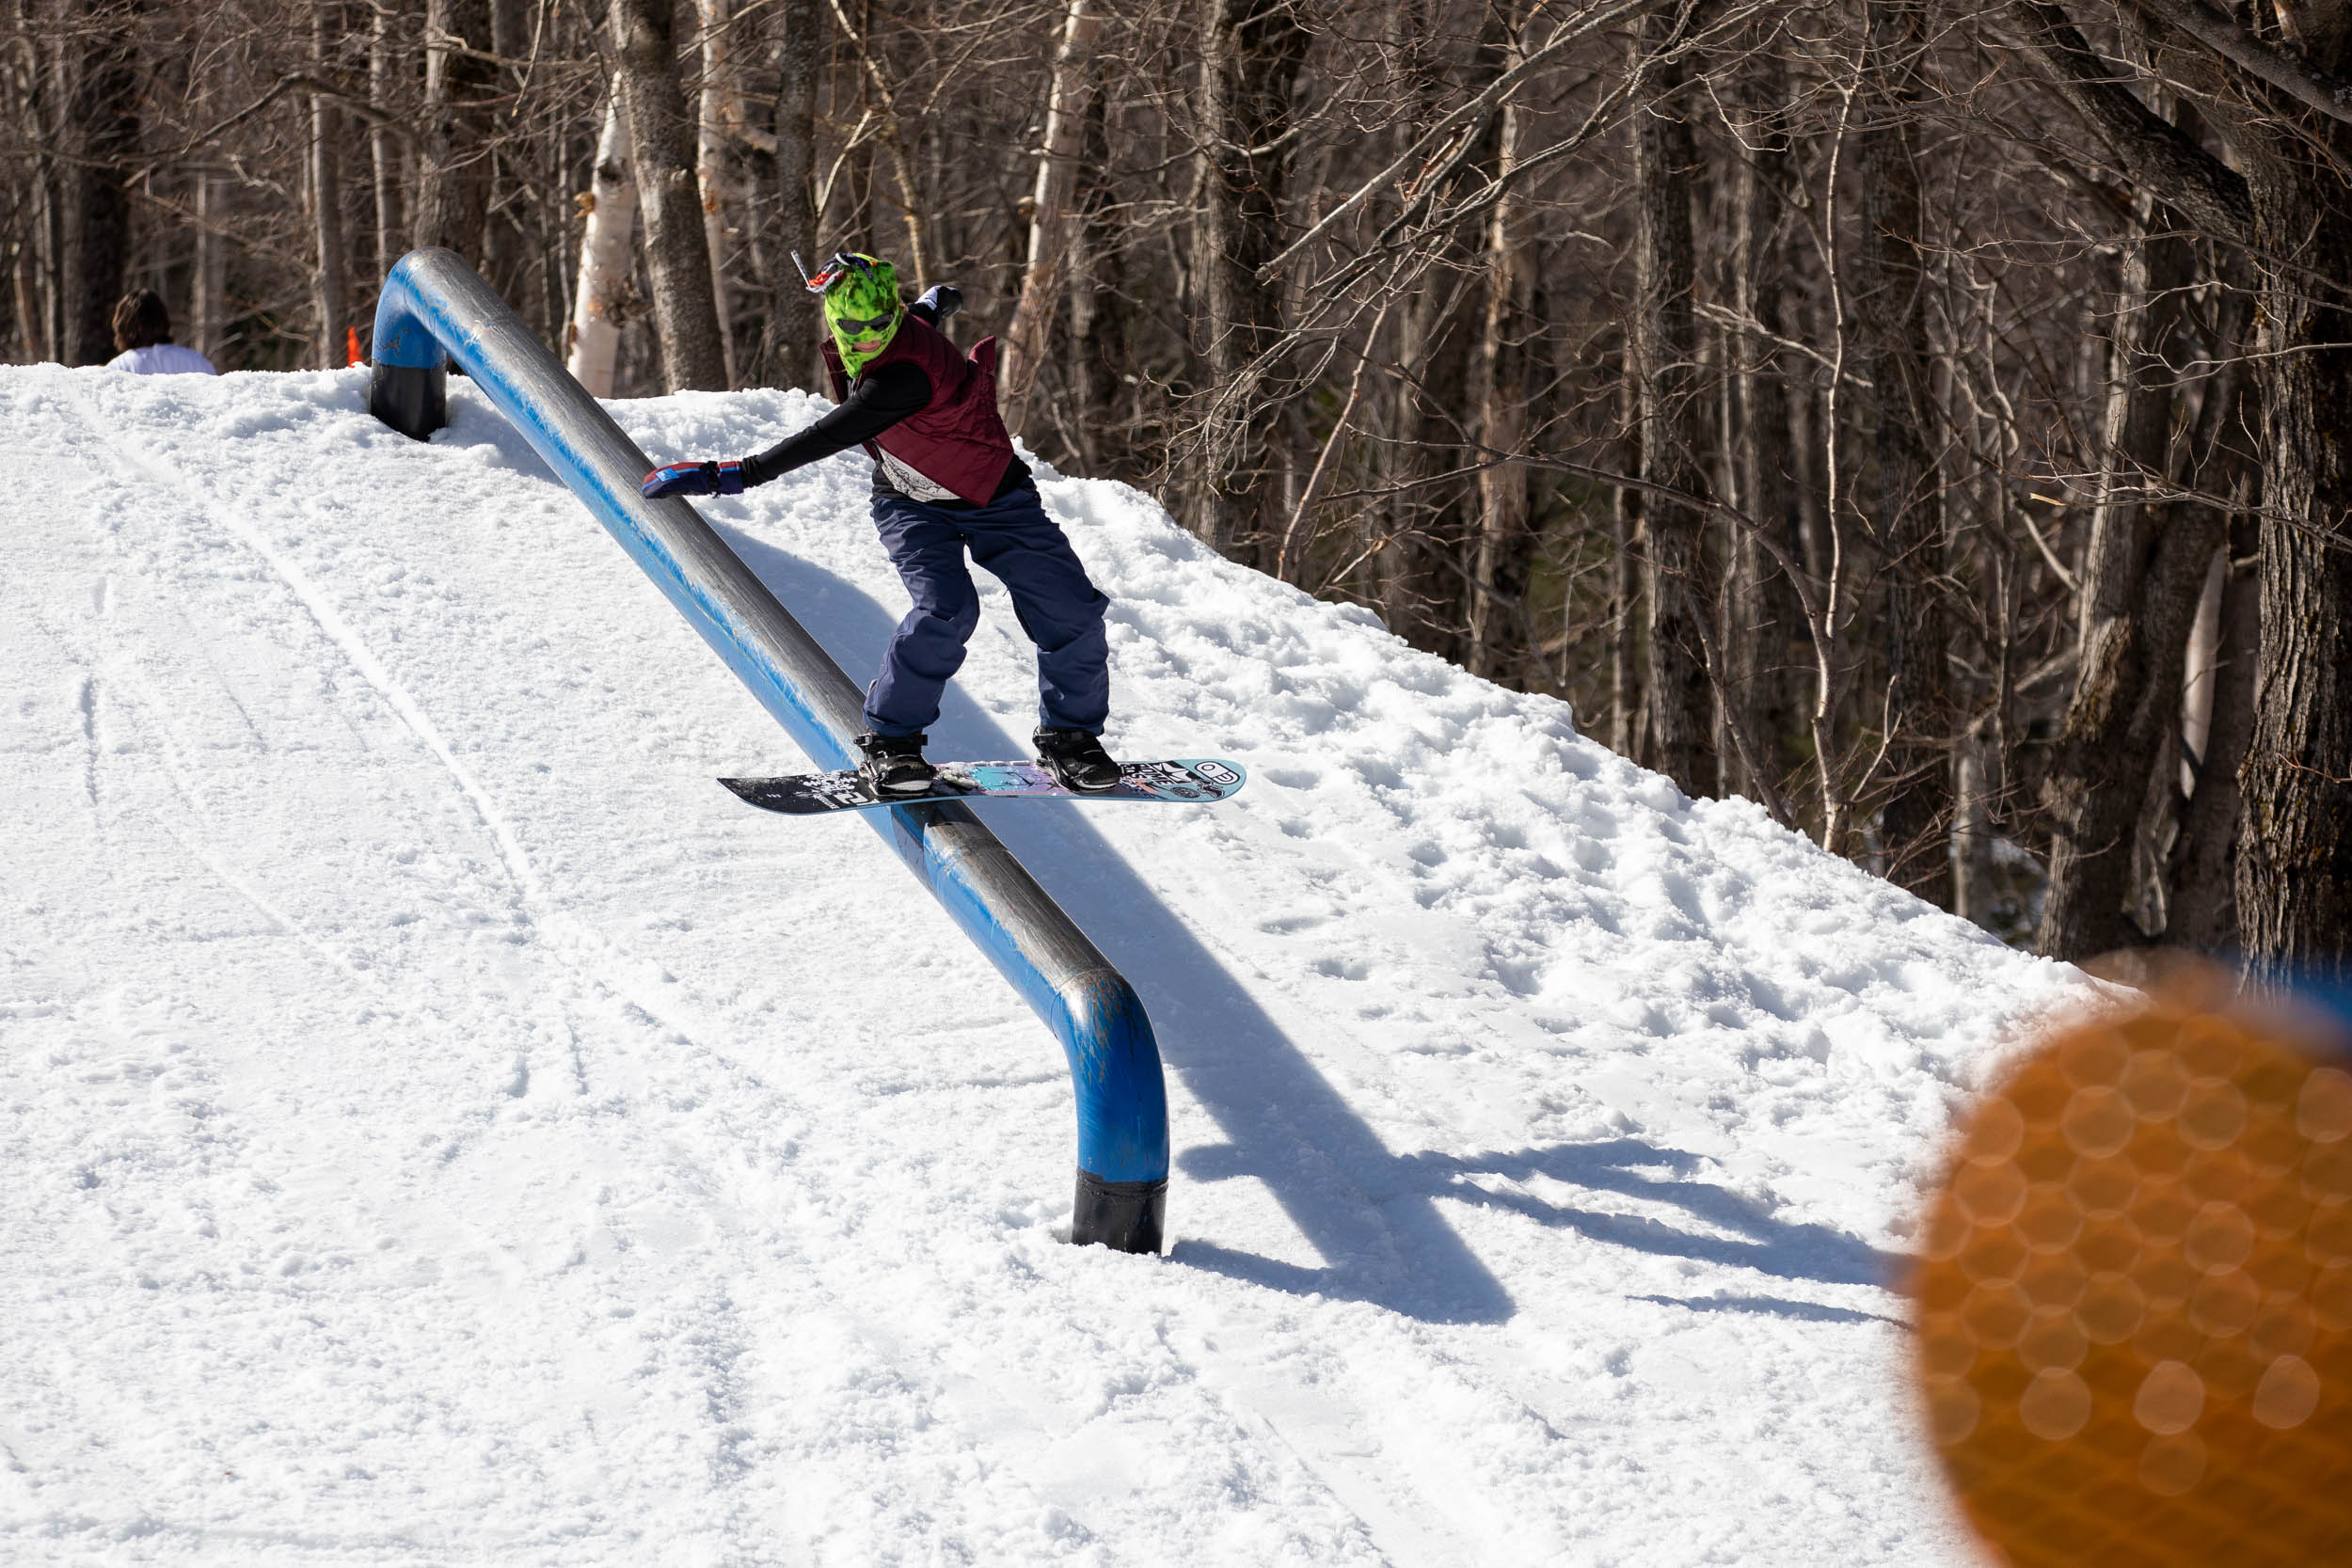 Madison Blackley snowboarding